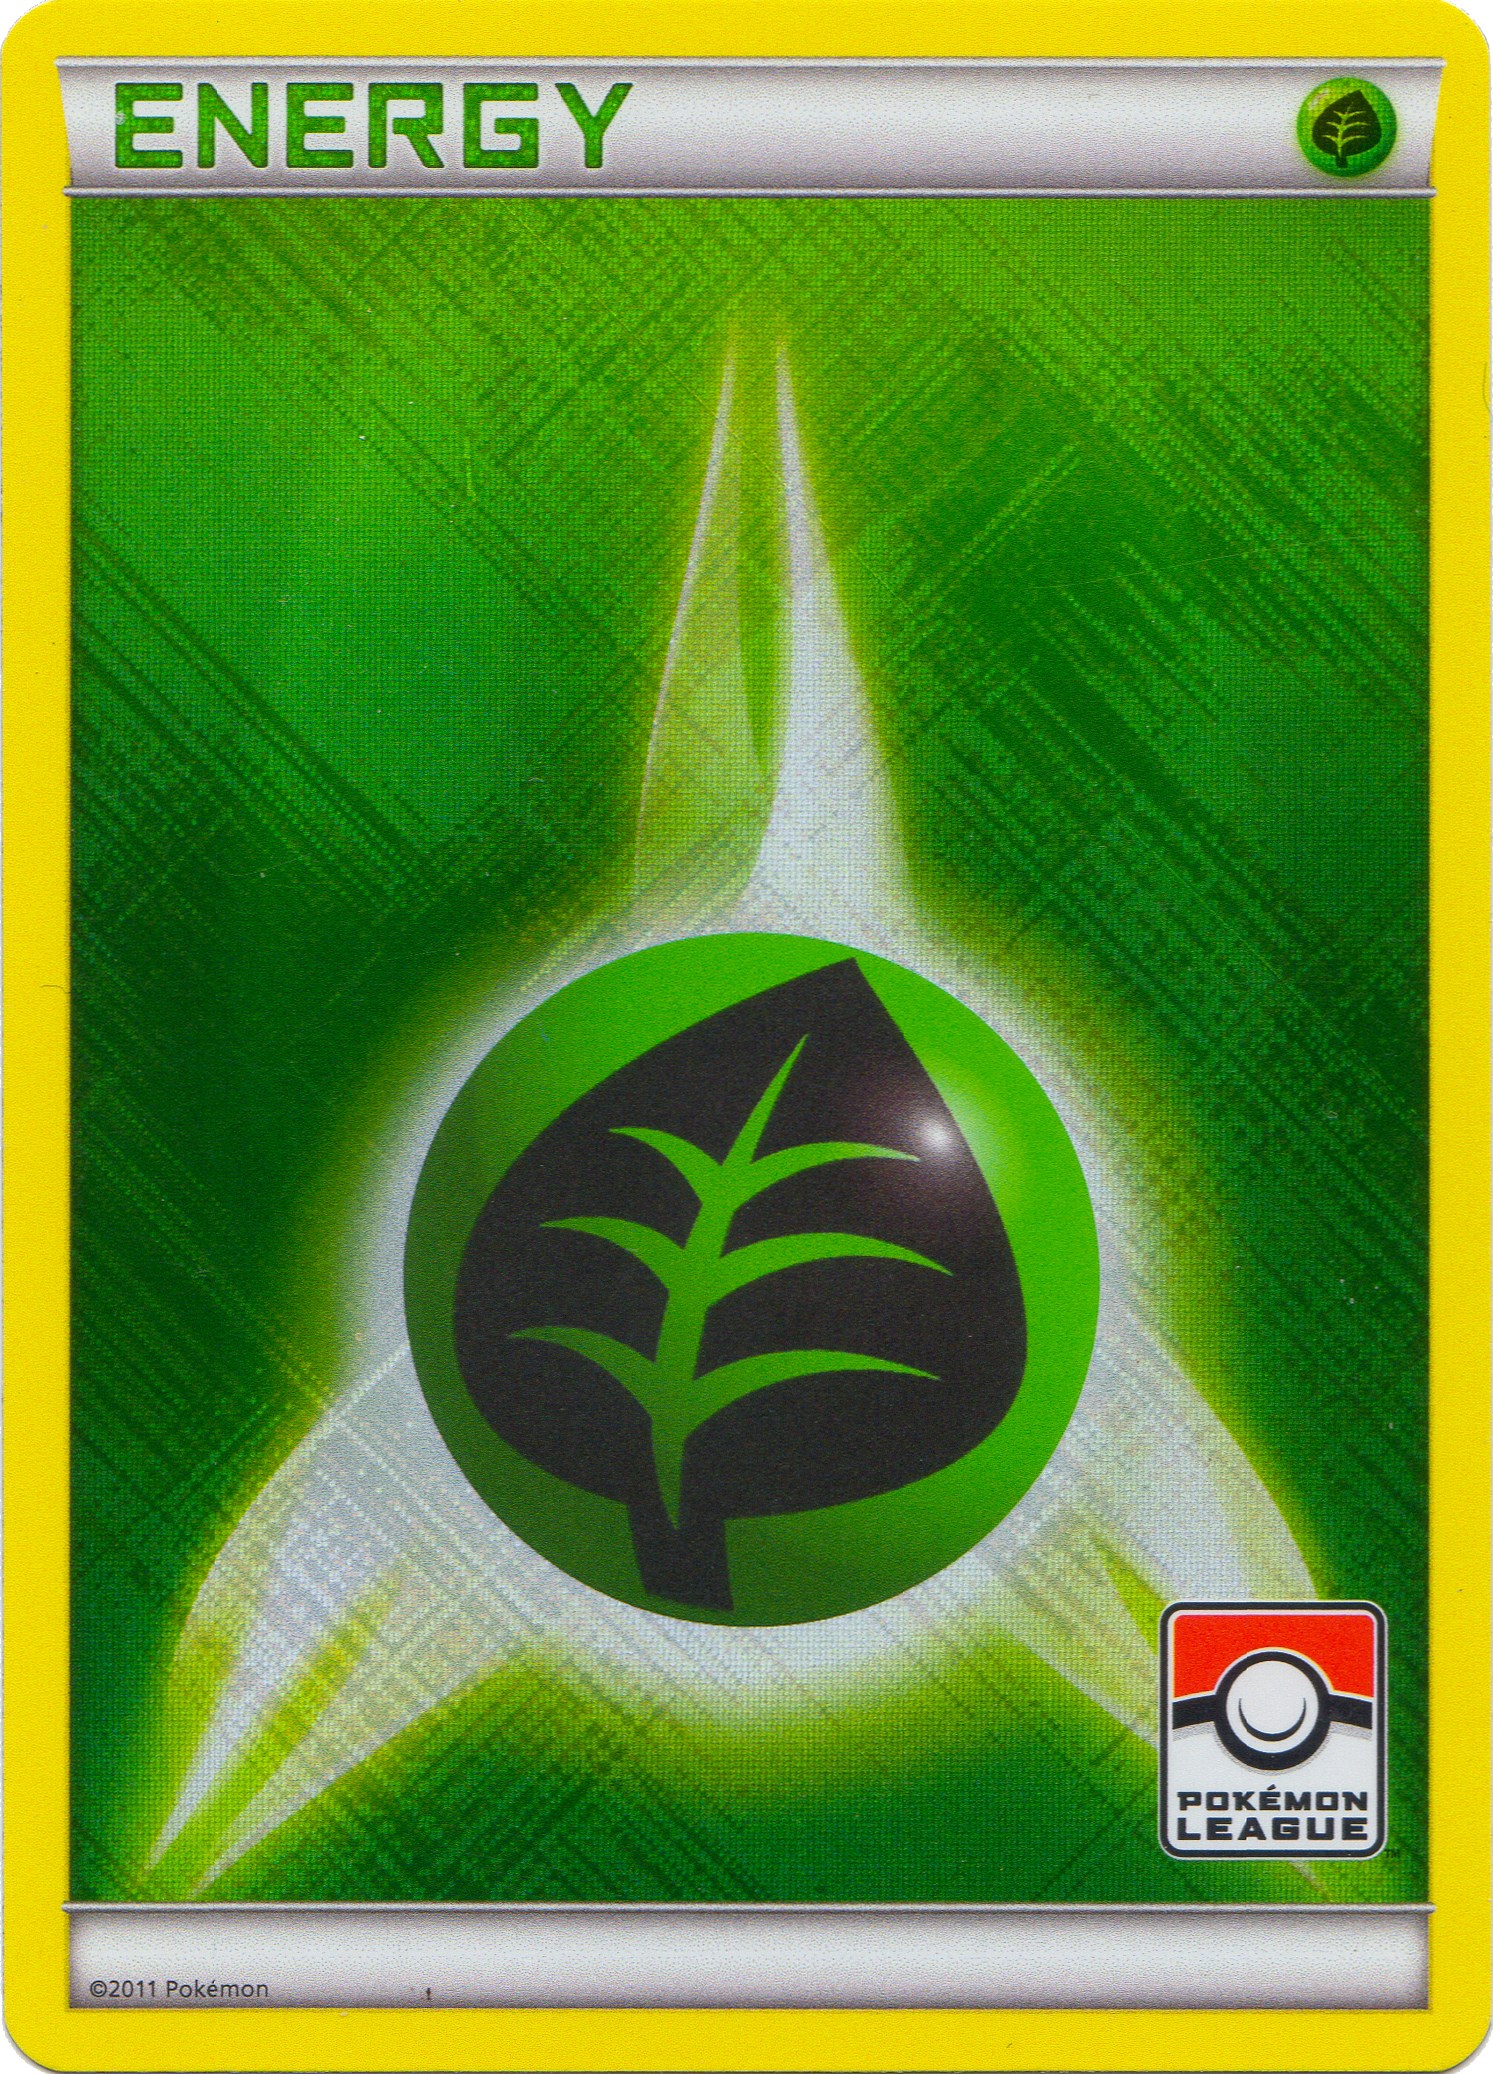 Grass Energy (2011 Pokemon League) - League & Championship Cards - Pokemon